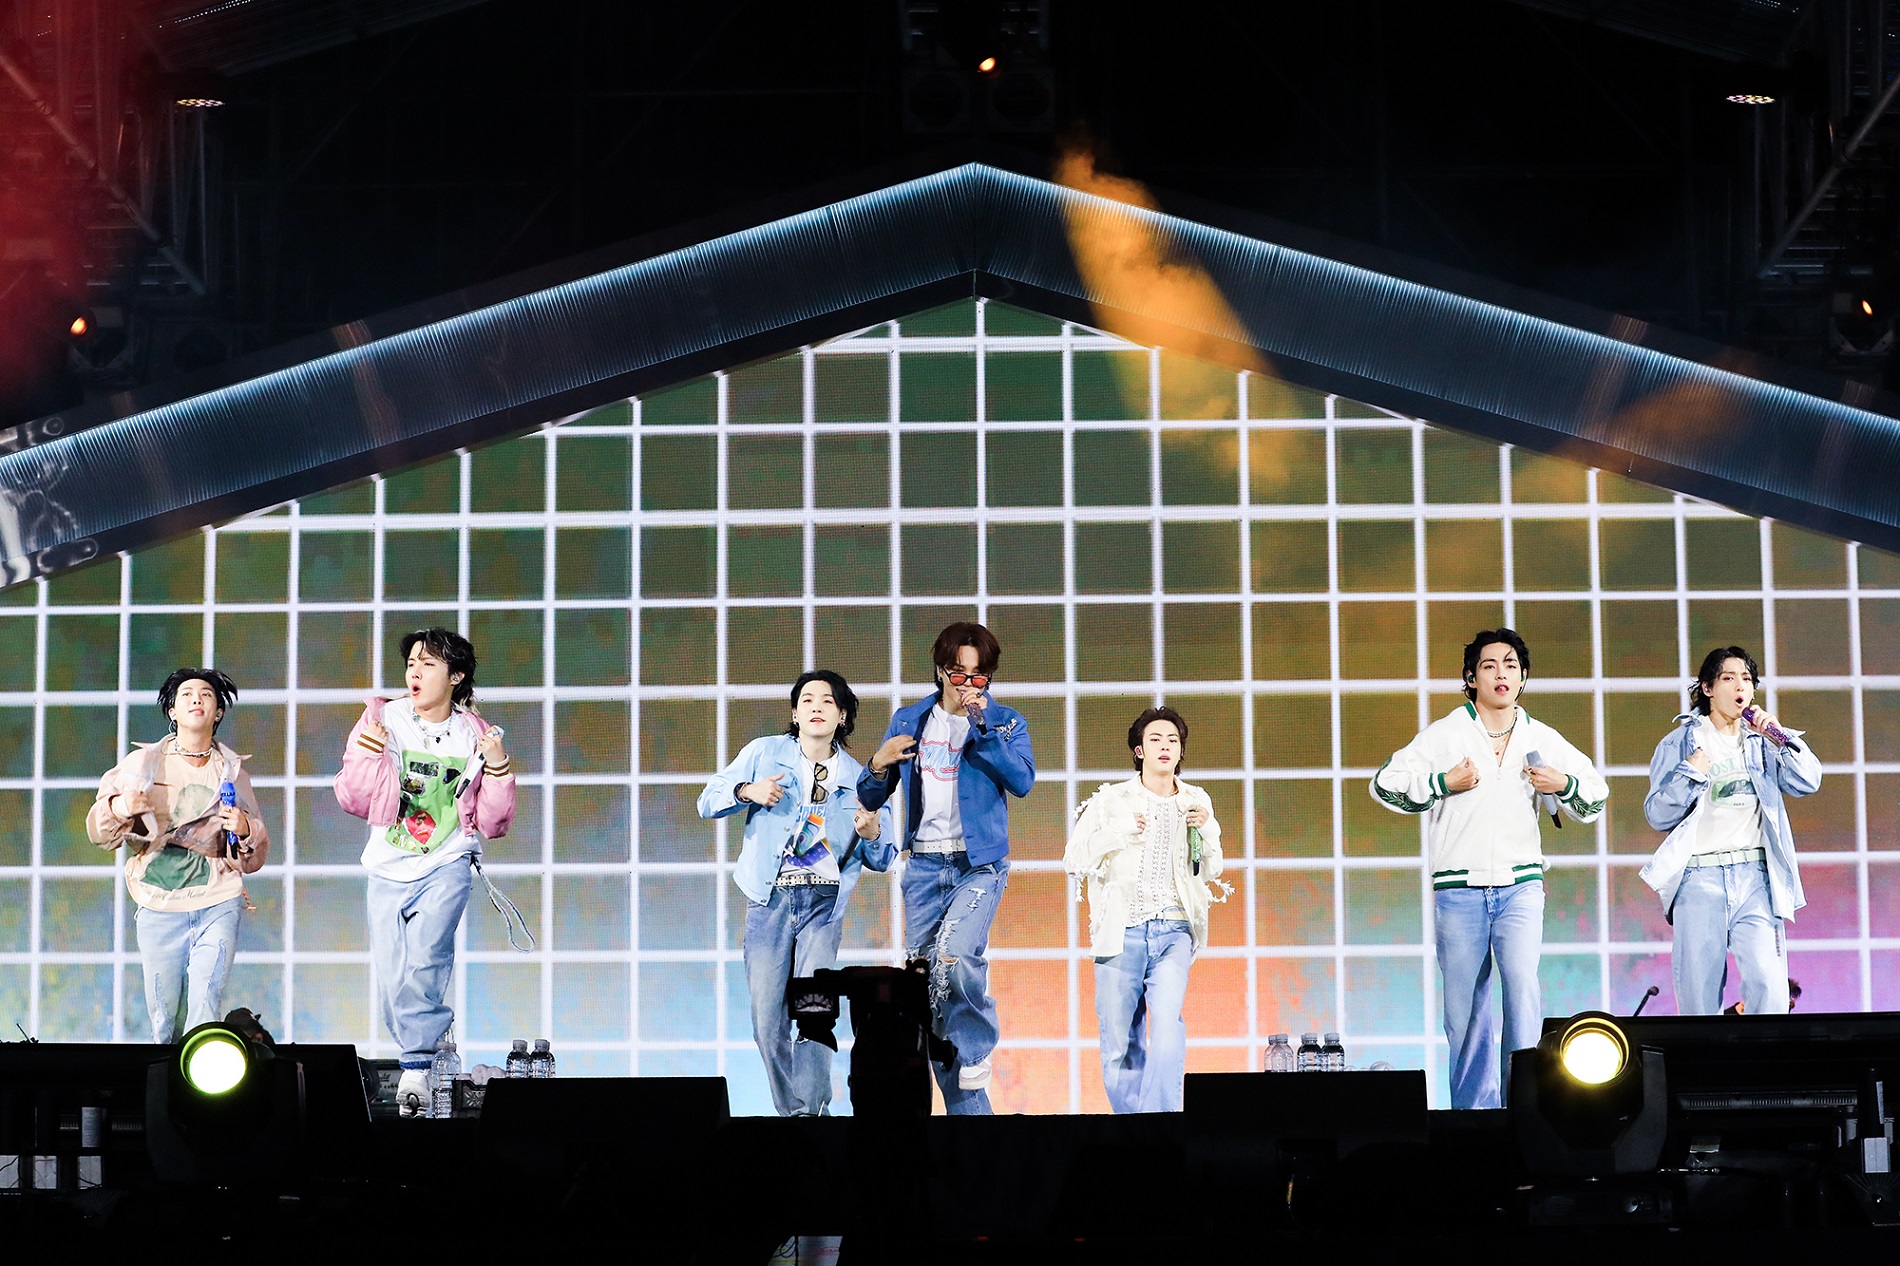 RM, J-Hope, Suga, Jimin, Jin, V, and Jungkook of BTS perform on stage